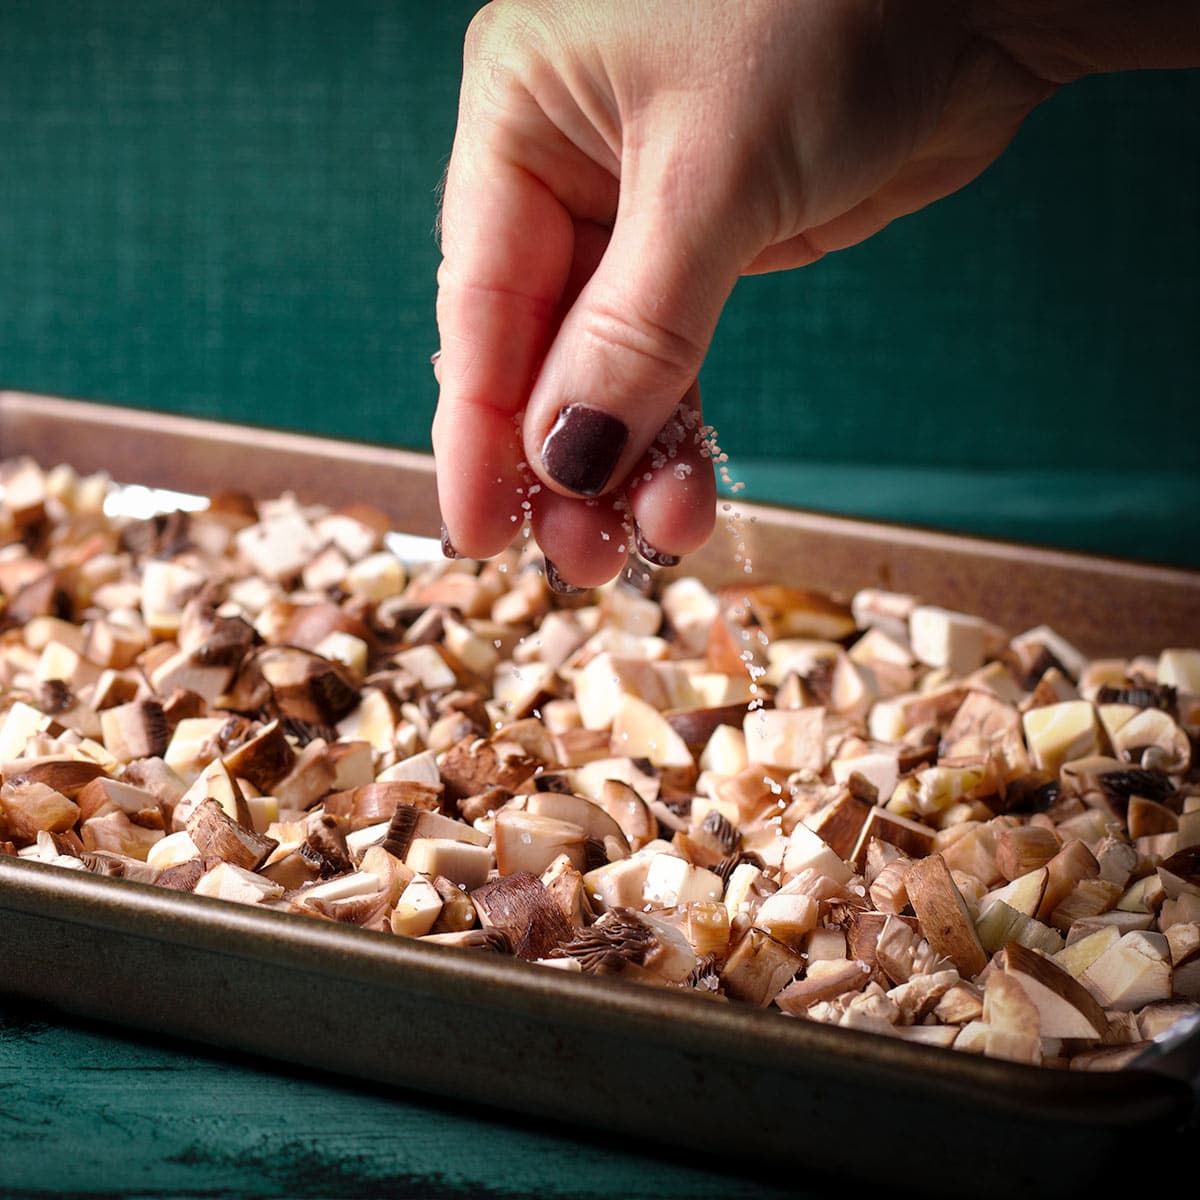 Sprinkle salt over the mushrooms before roasting.